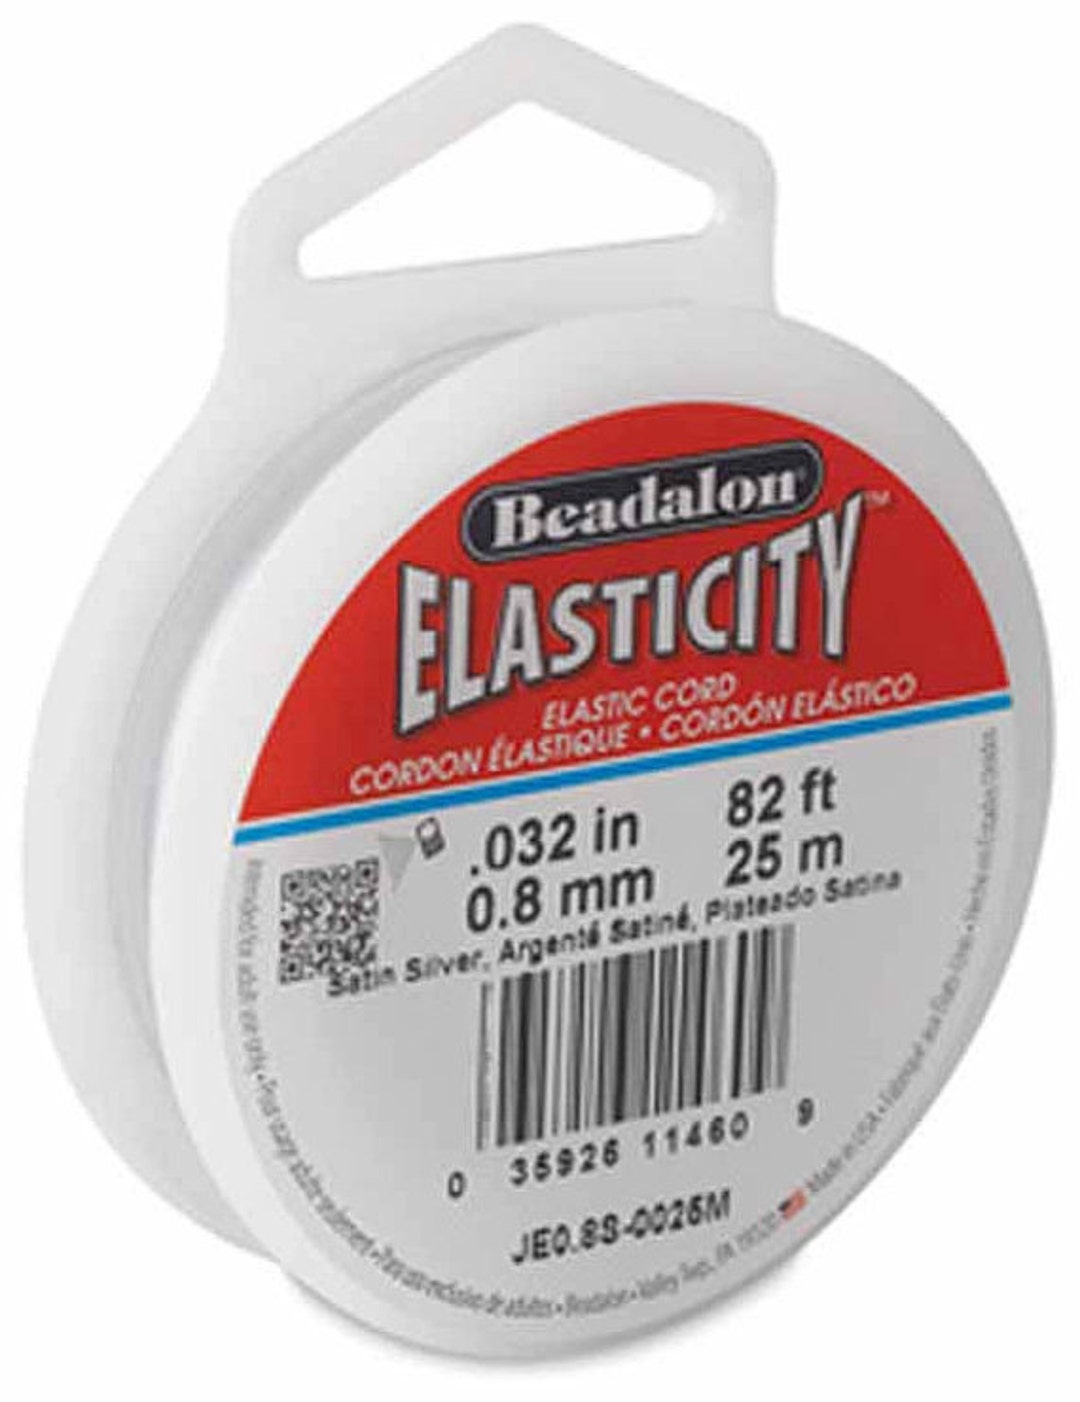 Beadalon Elasticity Clear Stretchy Cord Bulk Spool 1mm x 328 feet